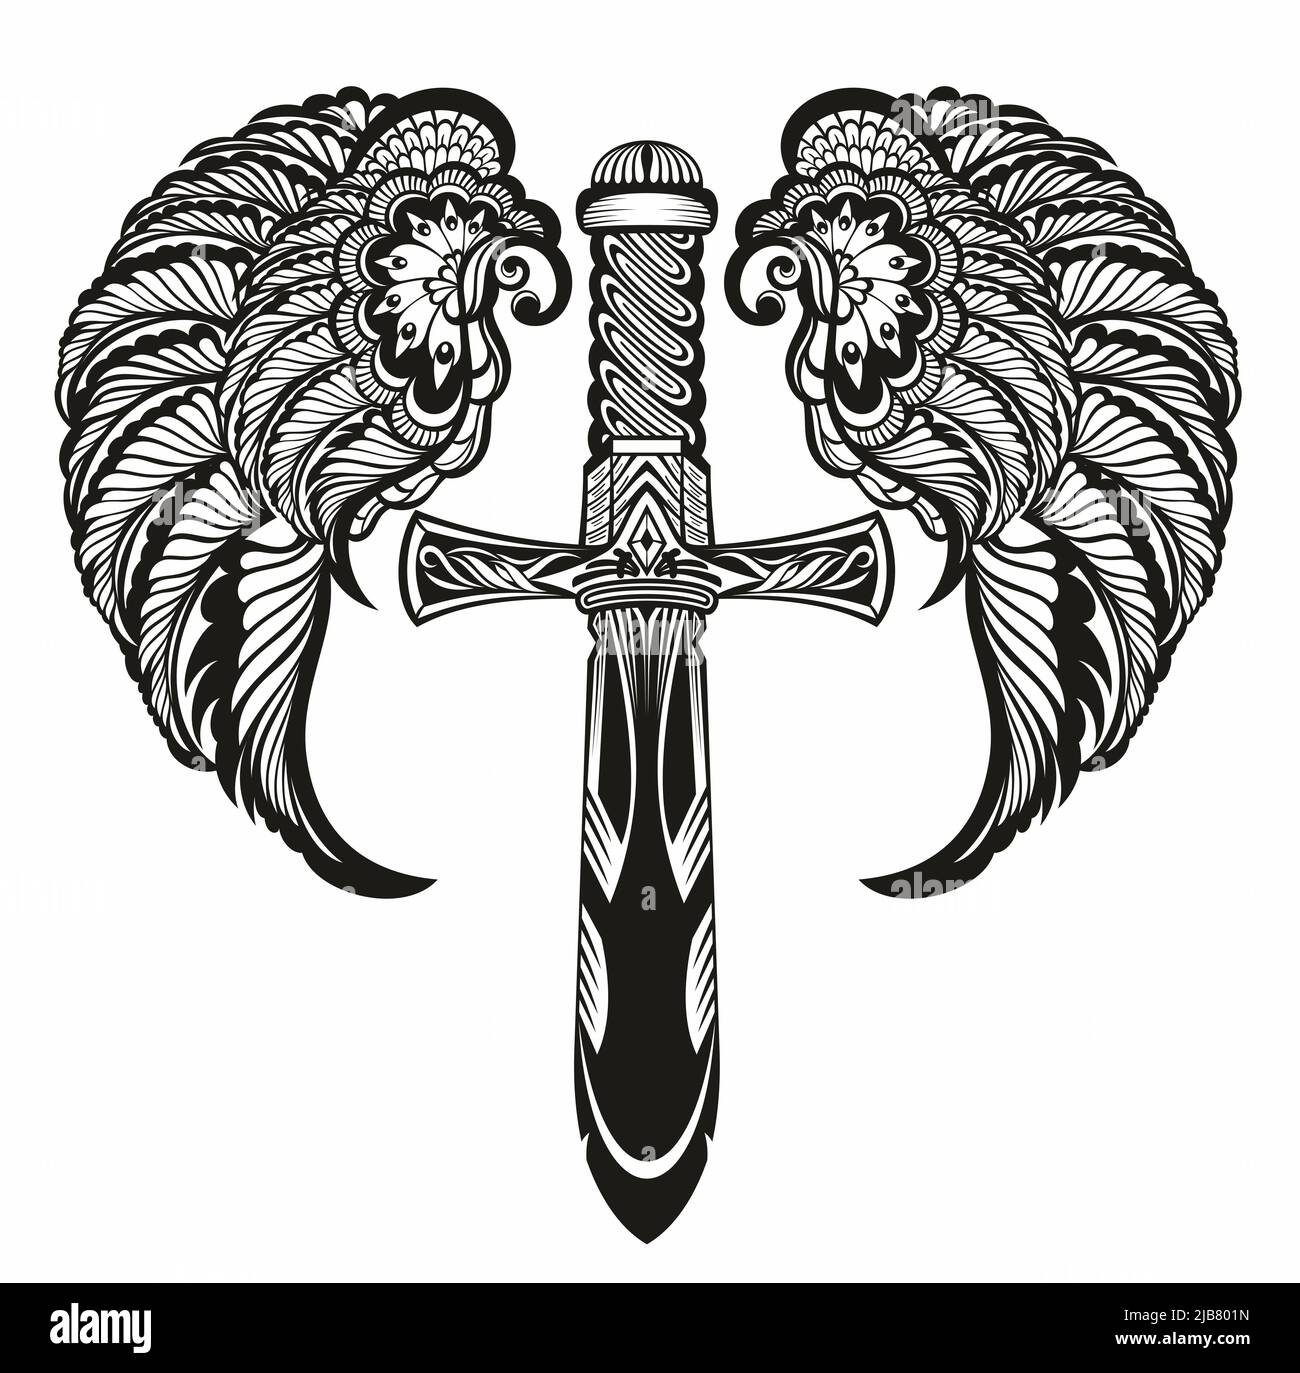 Demon wings tattoo Imágenes recortadas de stock - Alamy